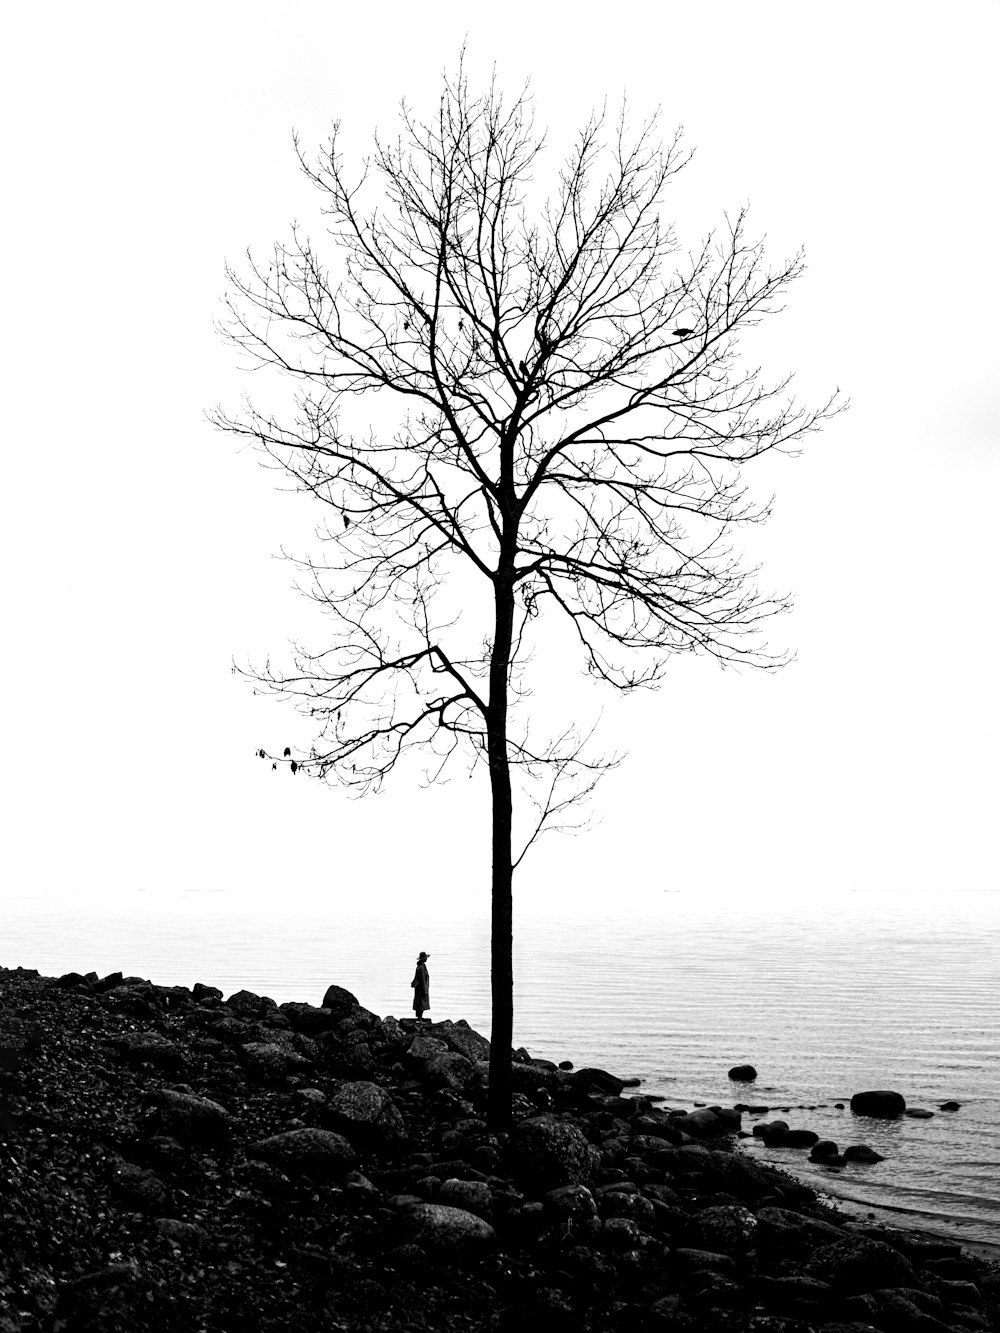 Fotografía de silueta de árbol desnudo